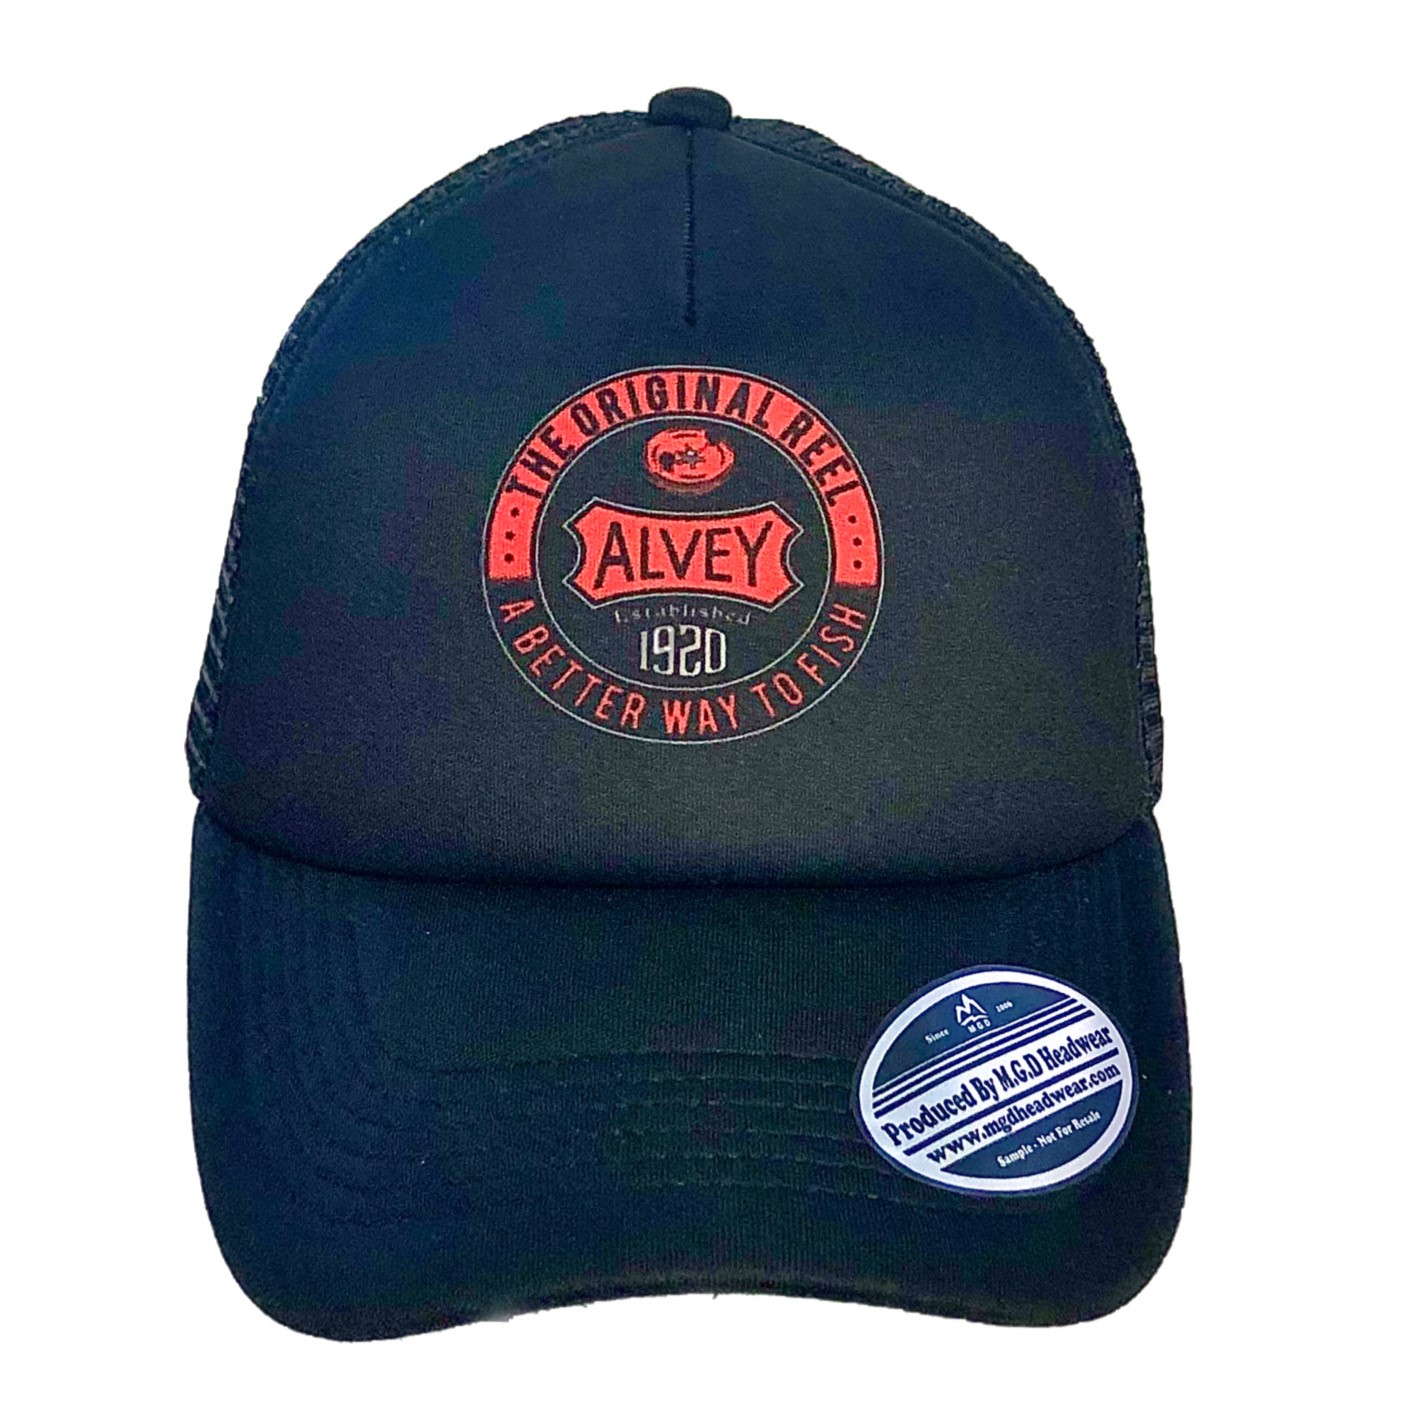 Alvey Traditional Cap Black/Red